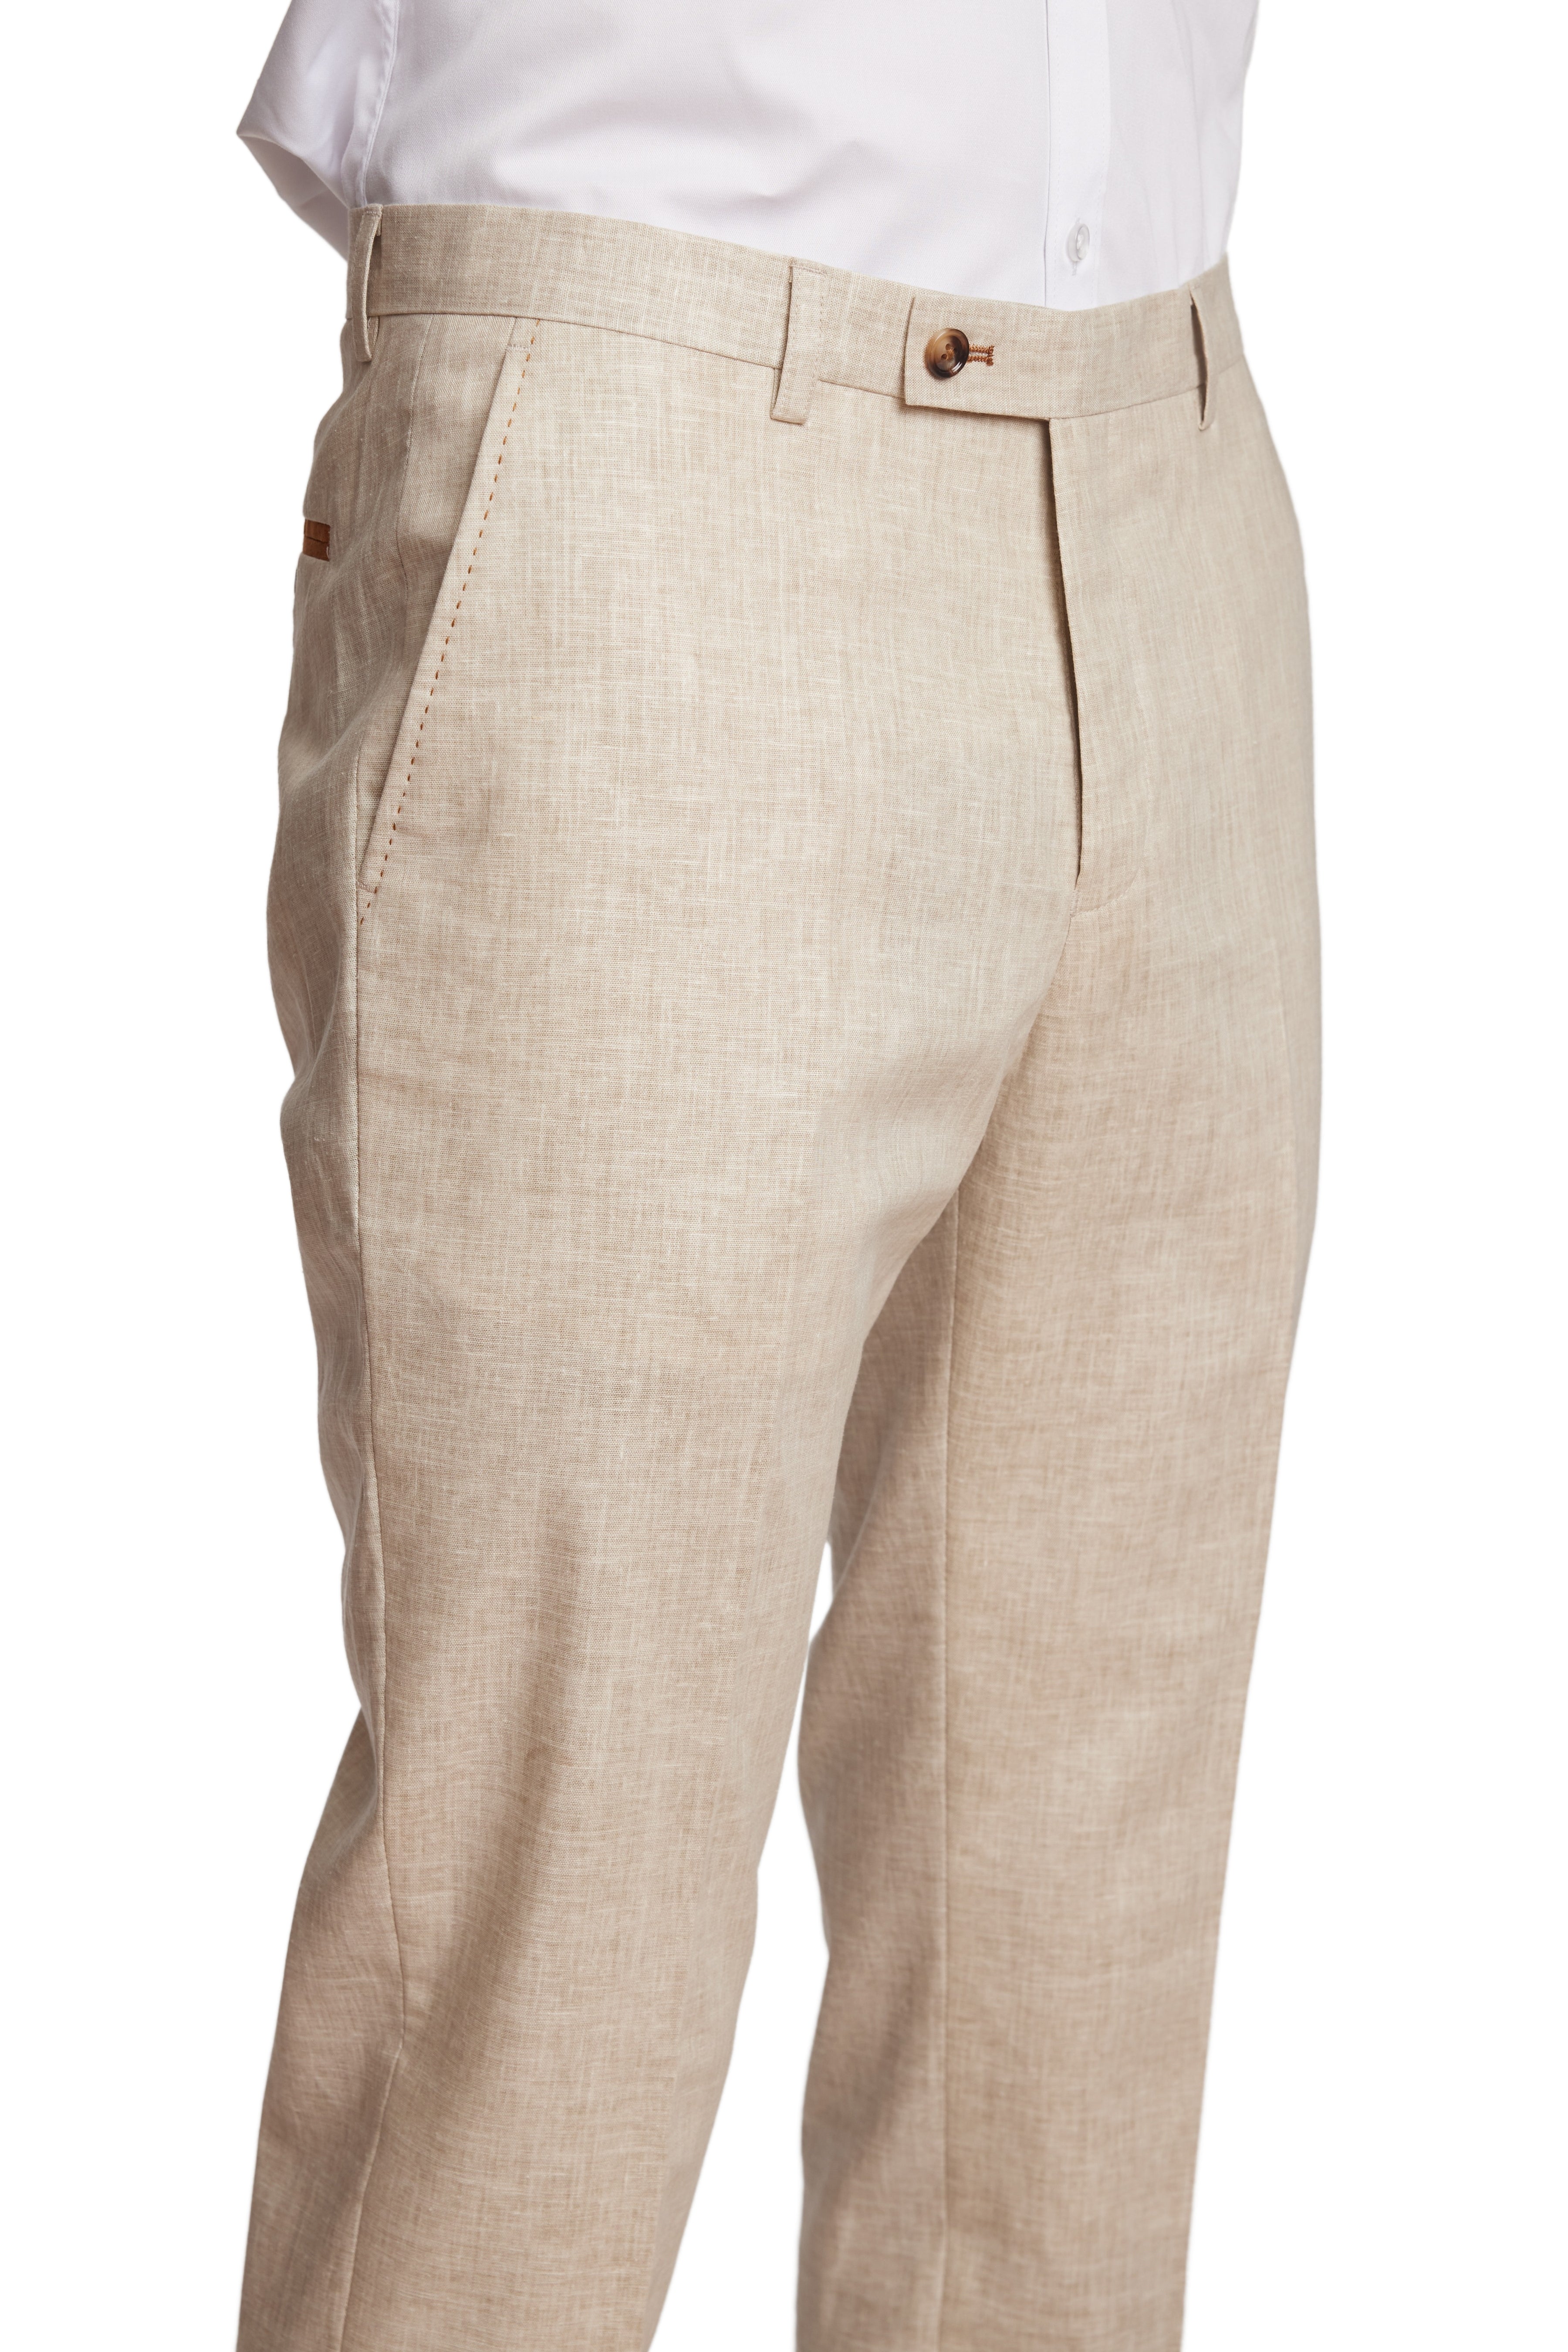 Downing Pants - slim - Tan Linen